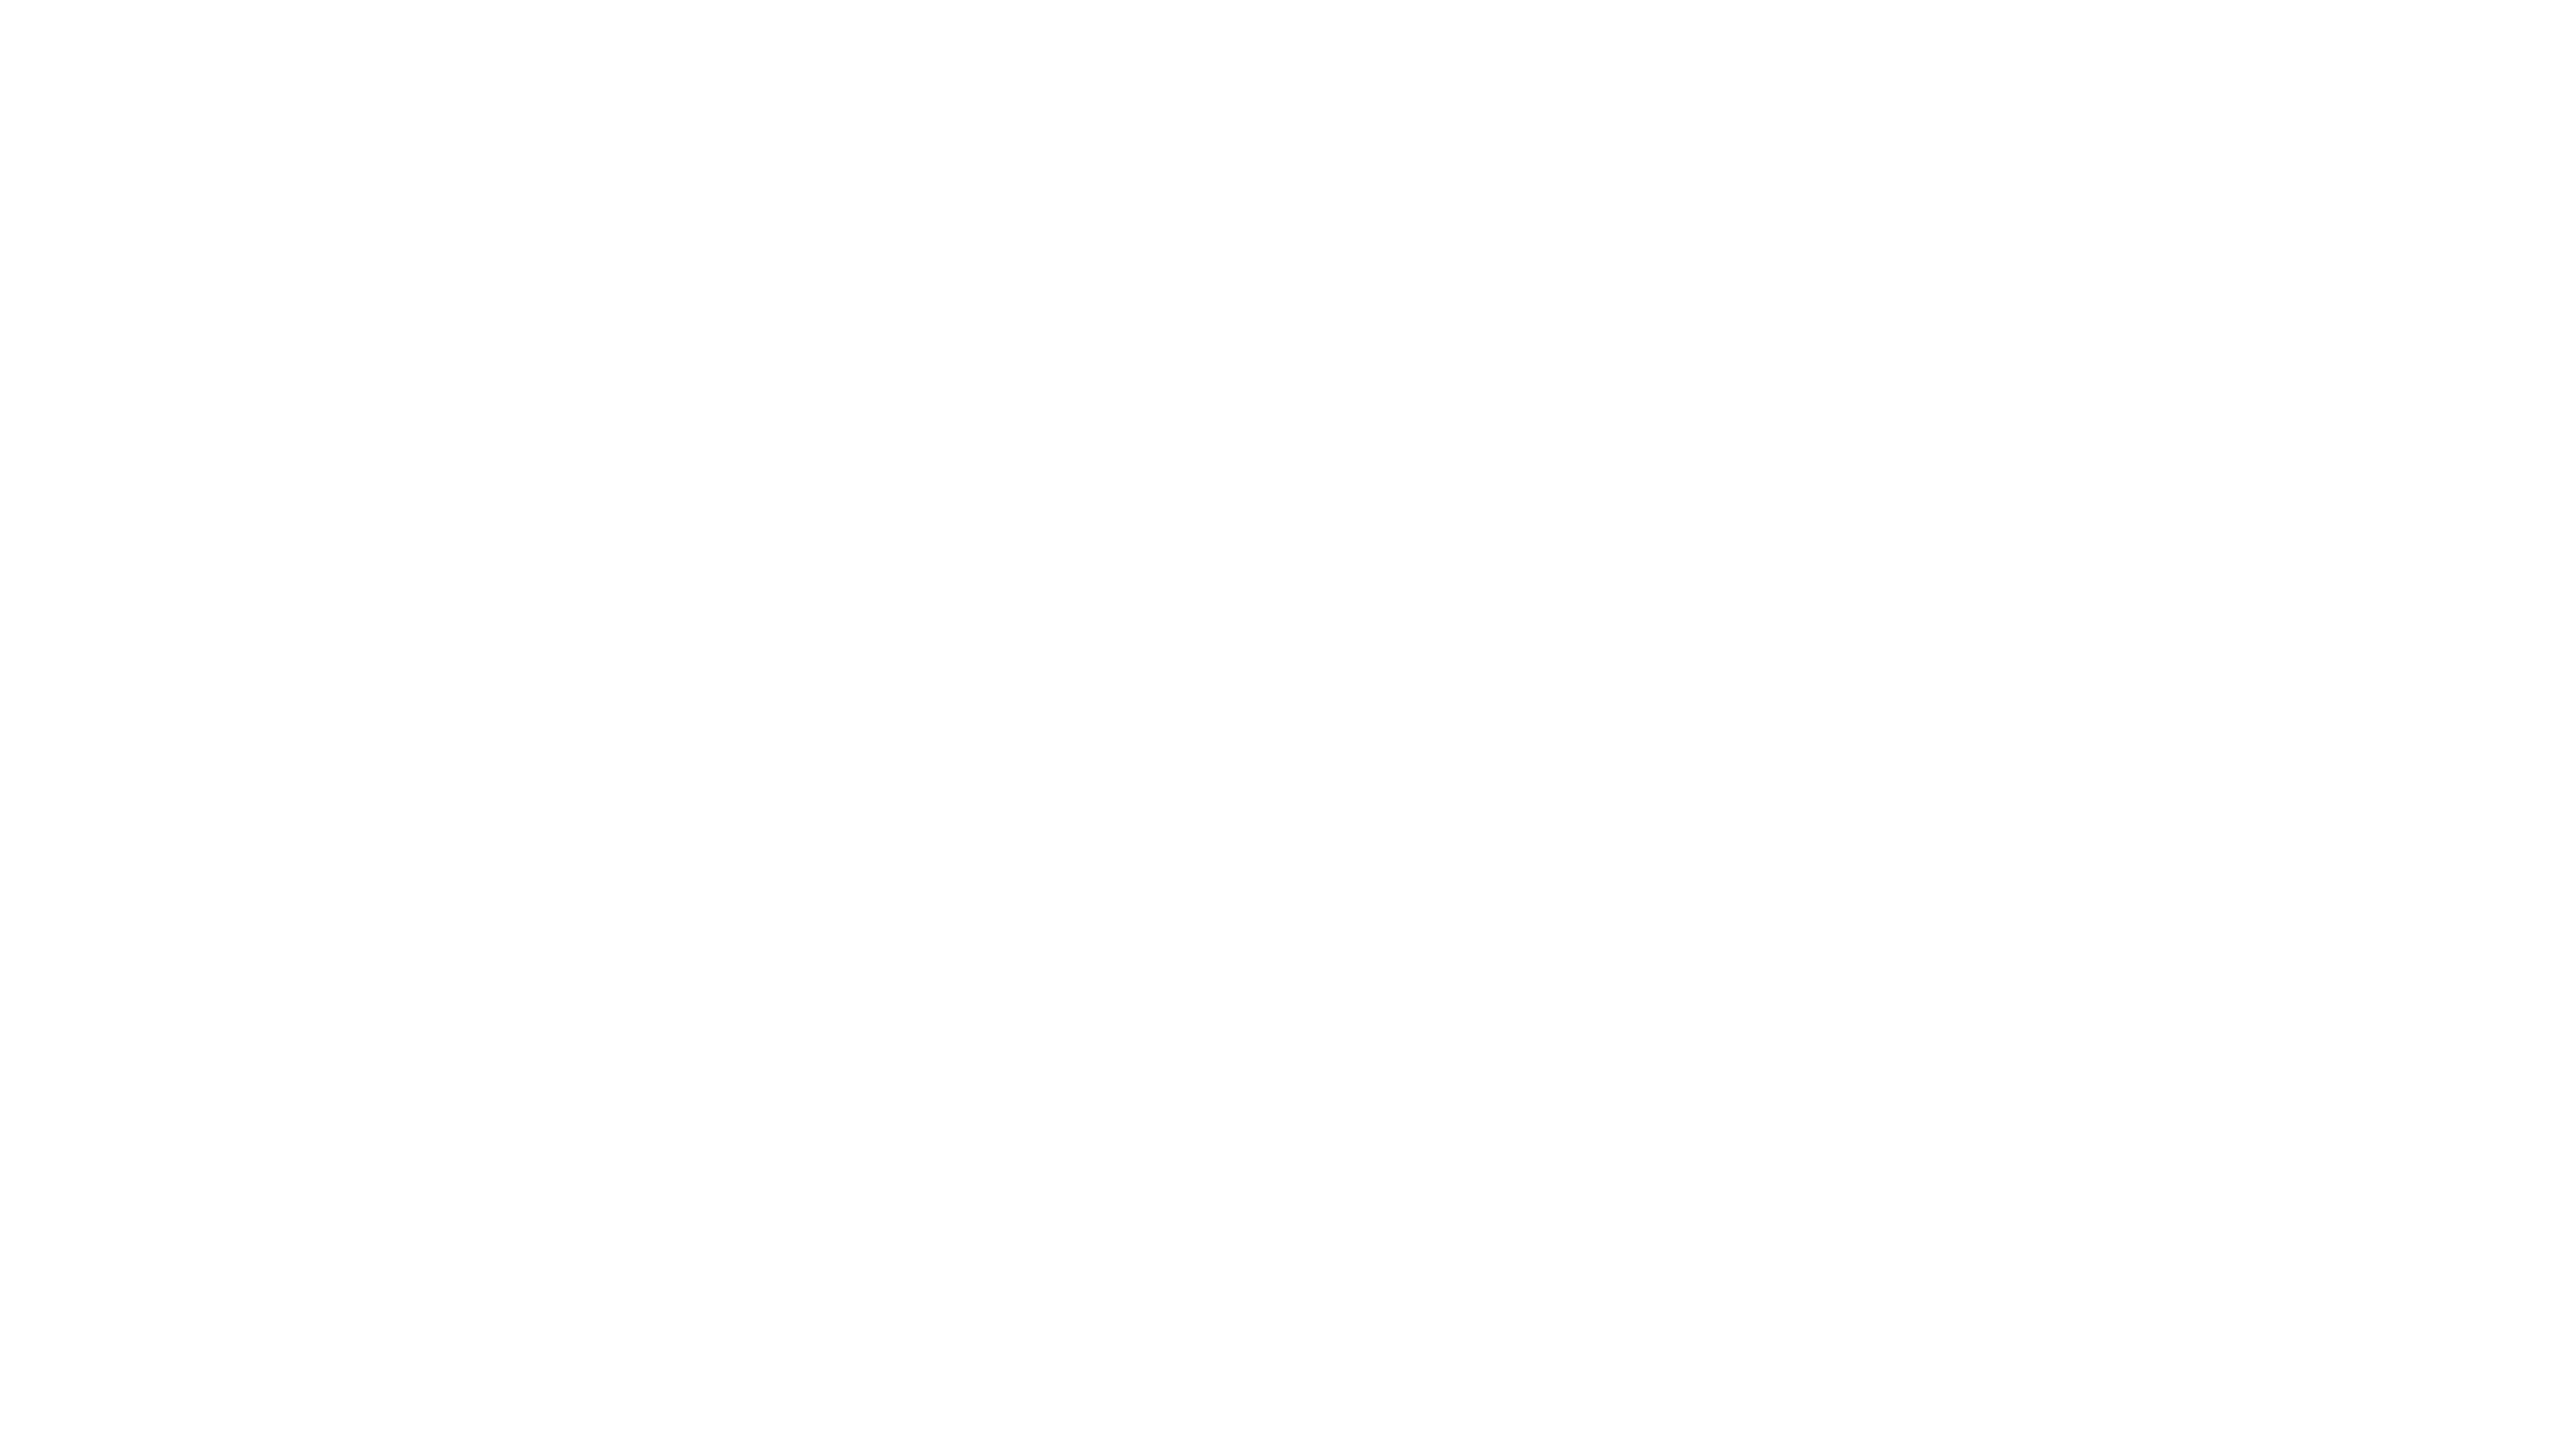 Eywa Jewelry